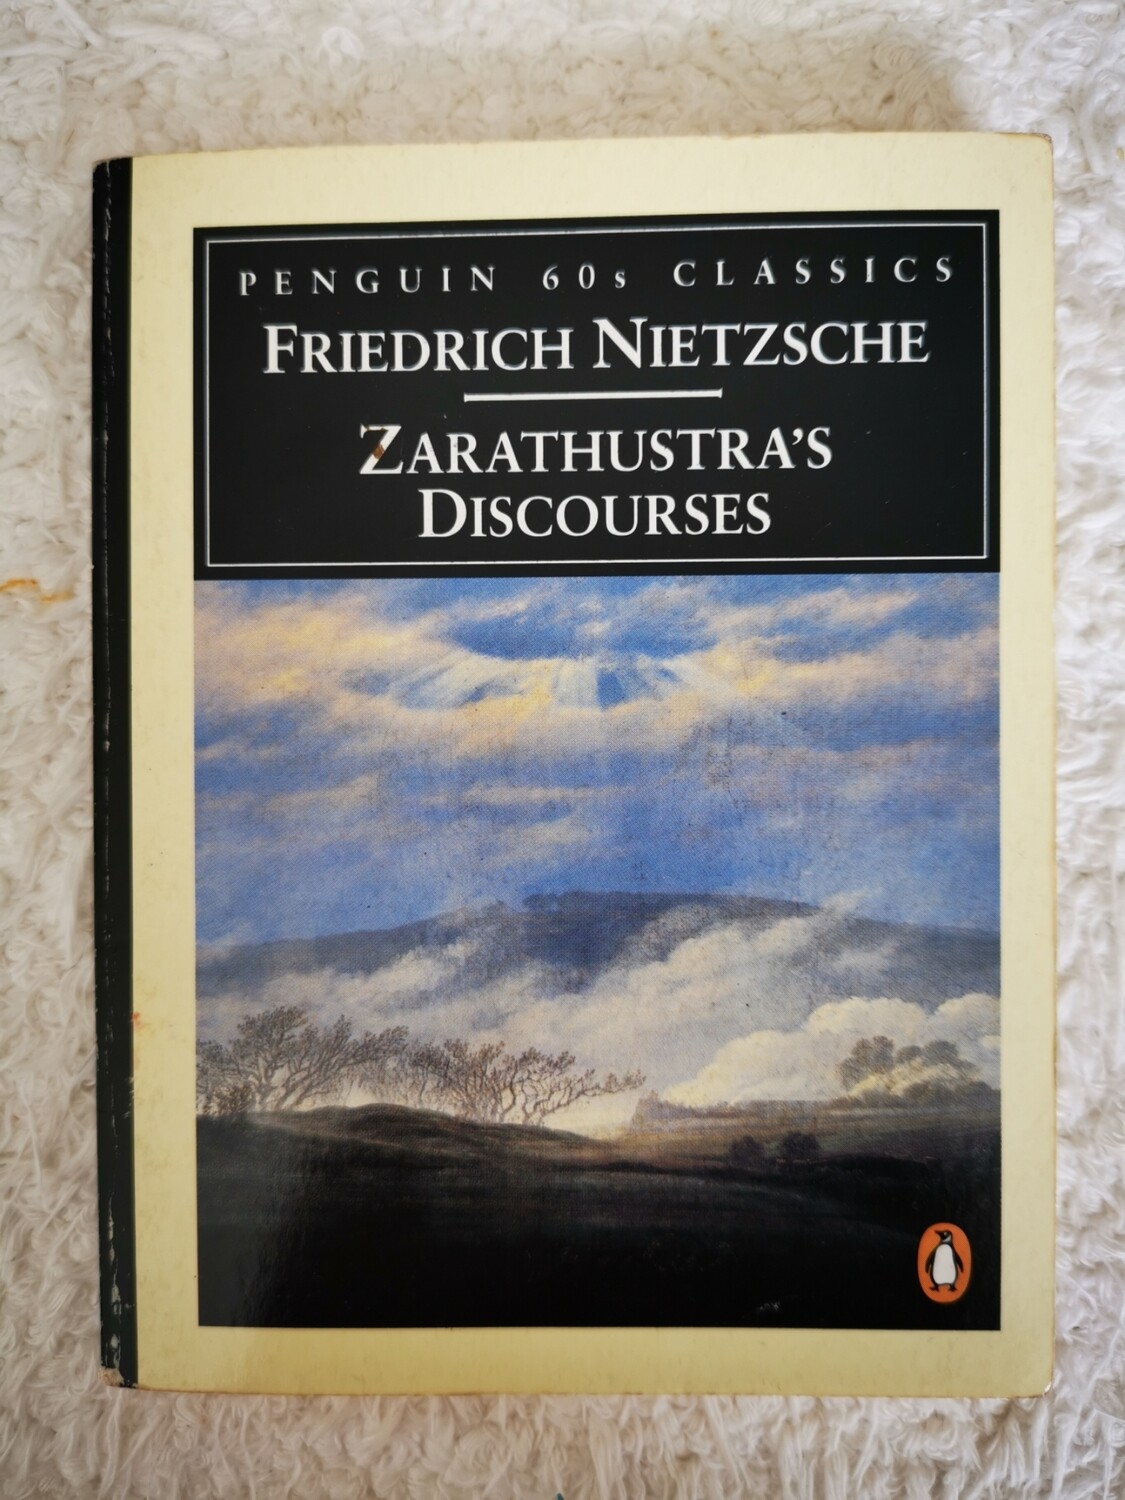 Zarathustra's discourses, Friedrich Nietzsche